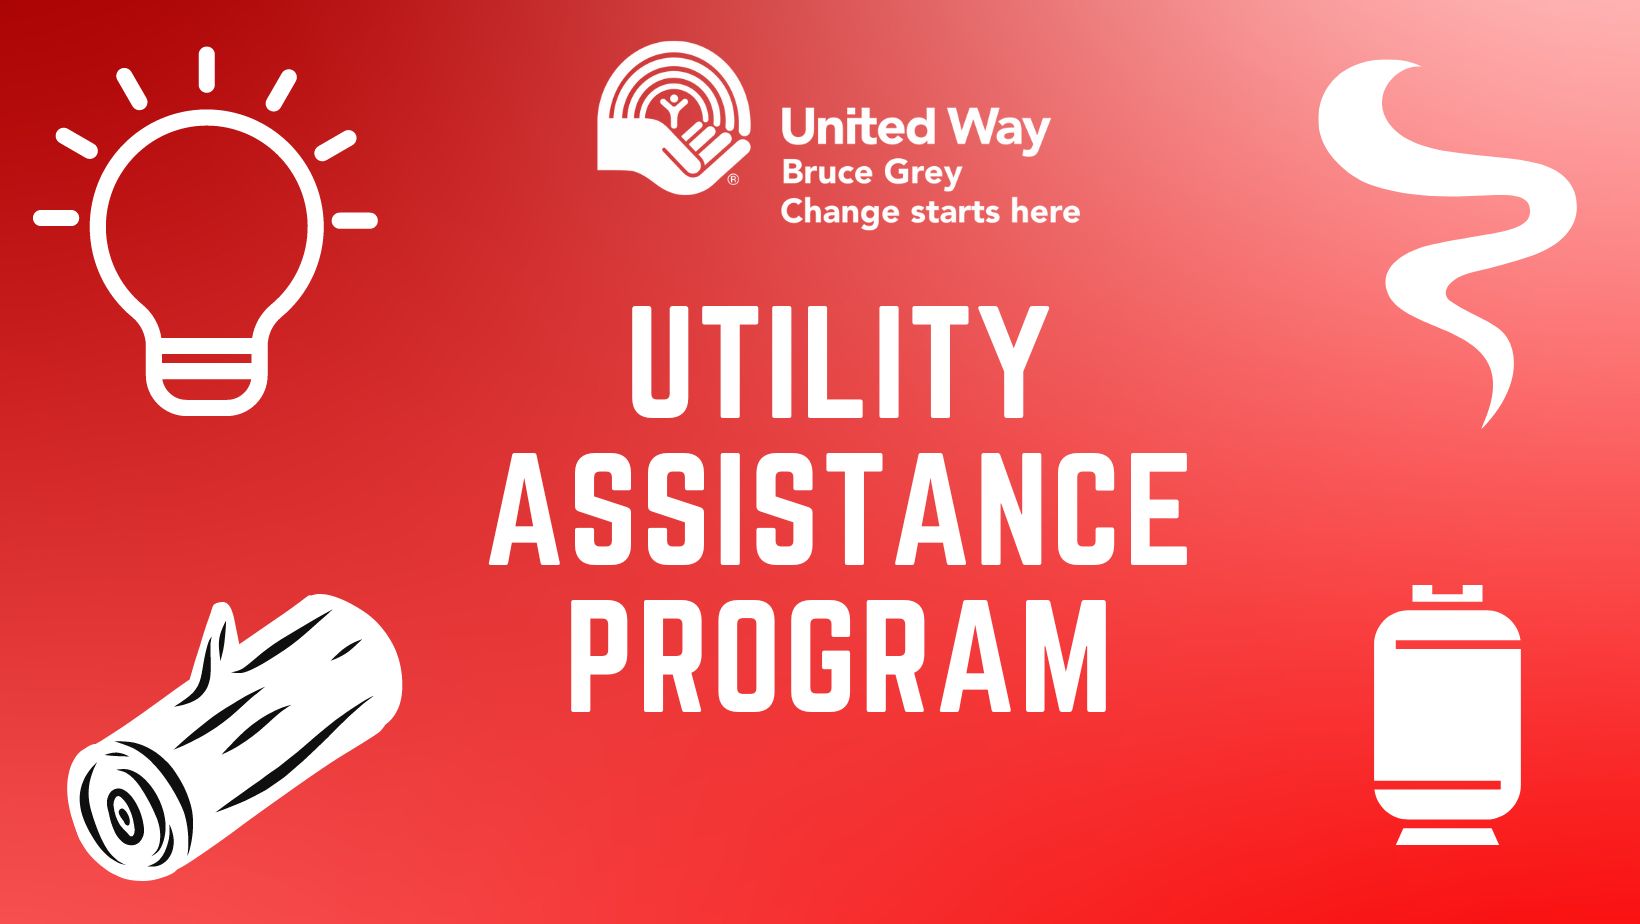 Utility Assistance Program - United Way of Bruce Grey